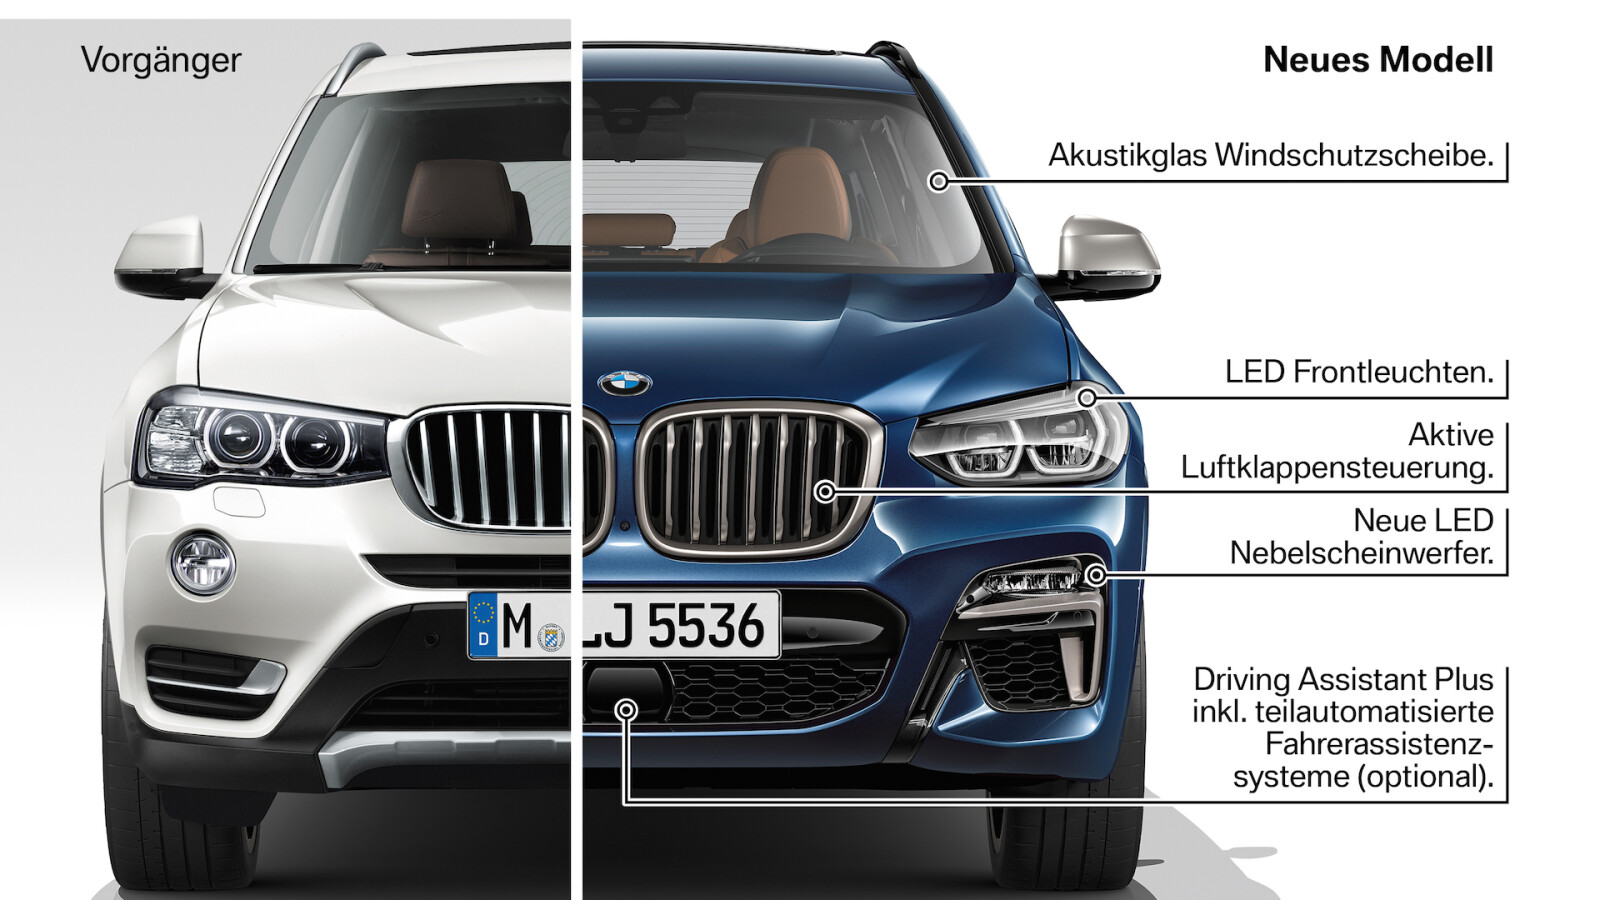 BMW X3 (2017): Alle Infos zum neuen Modell - NETZWELT - 1600 x 900 jpeg 244kB